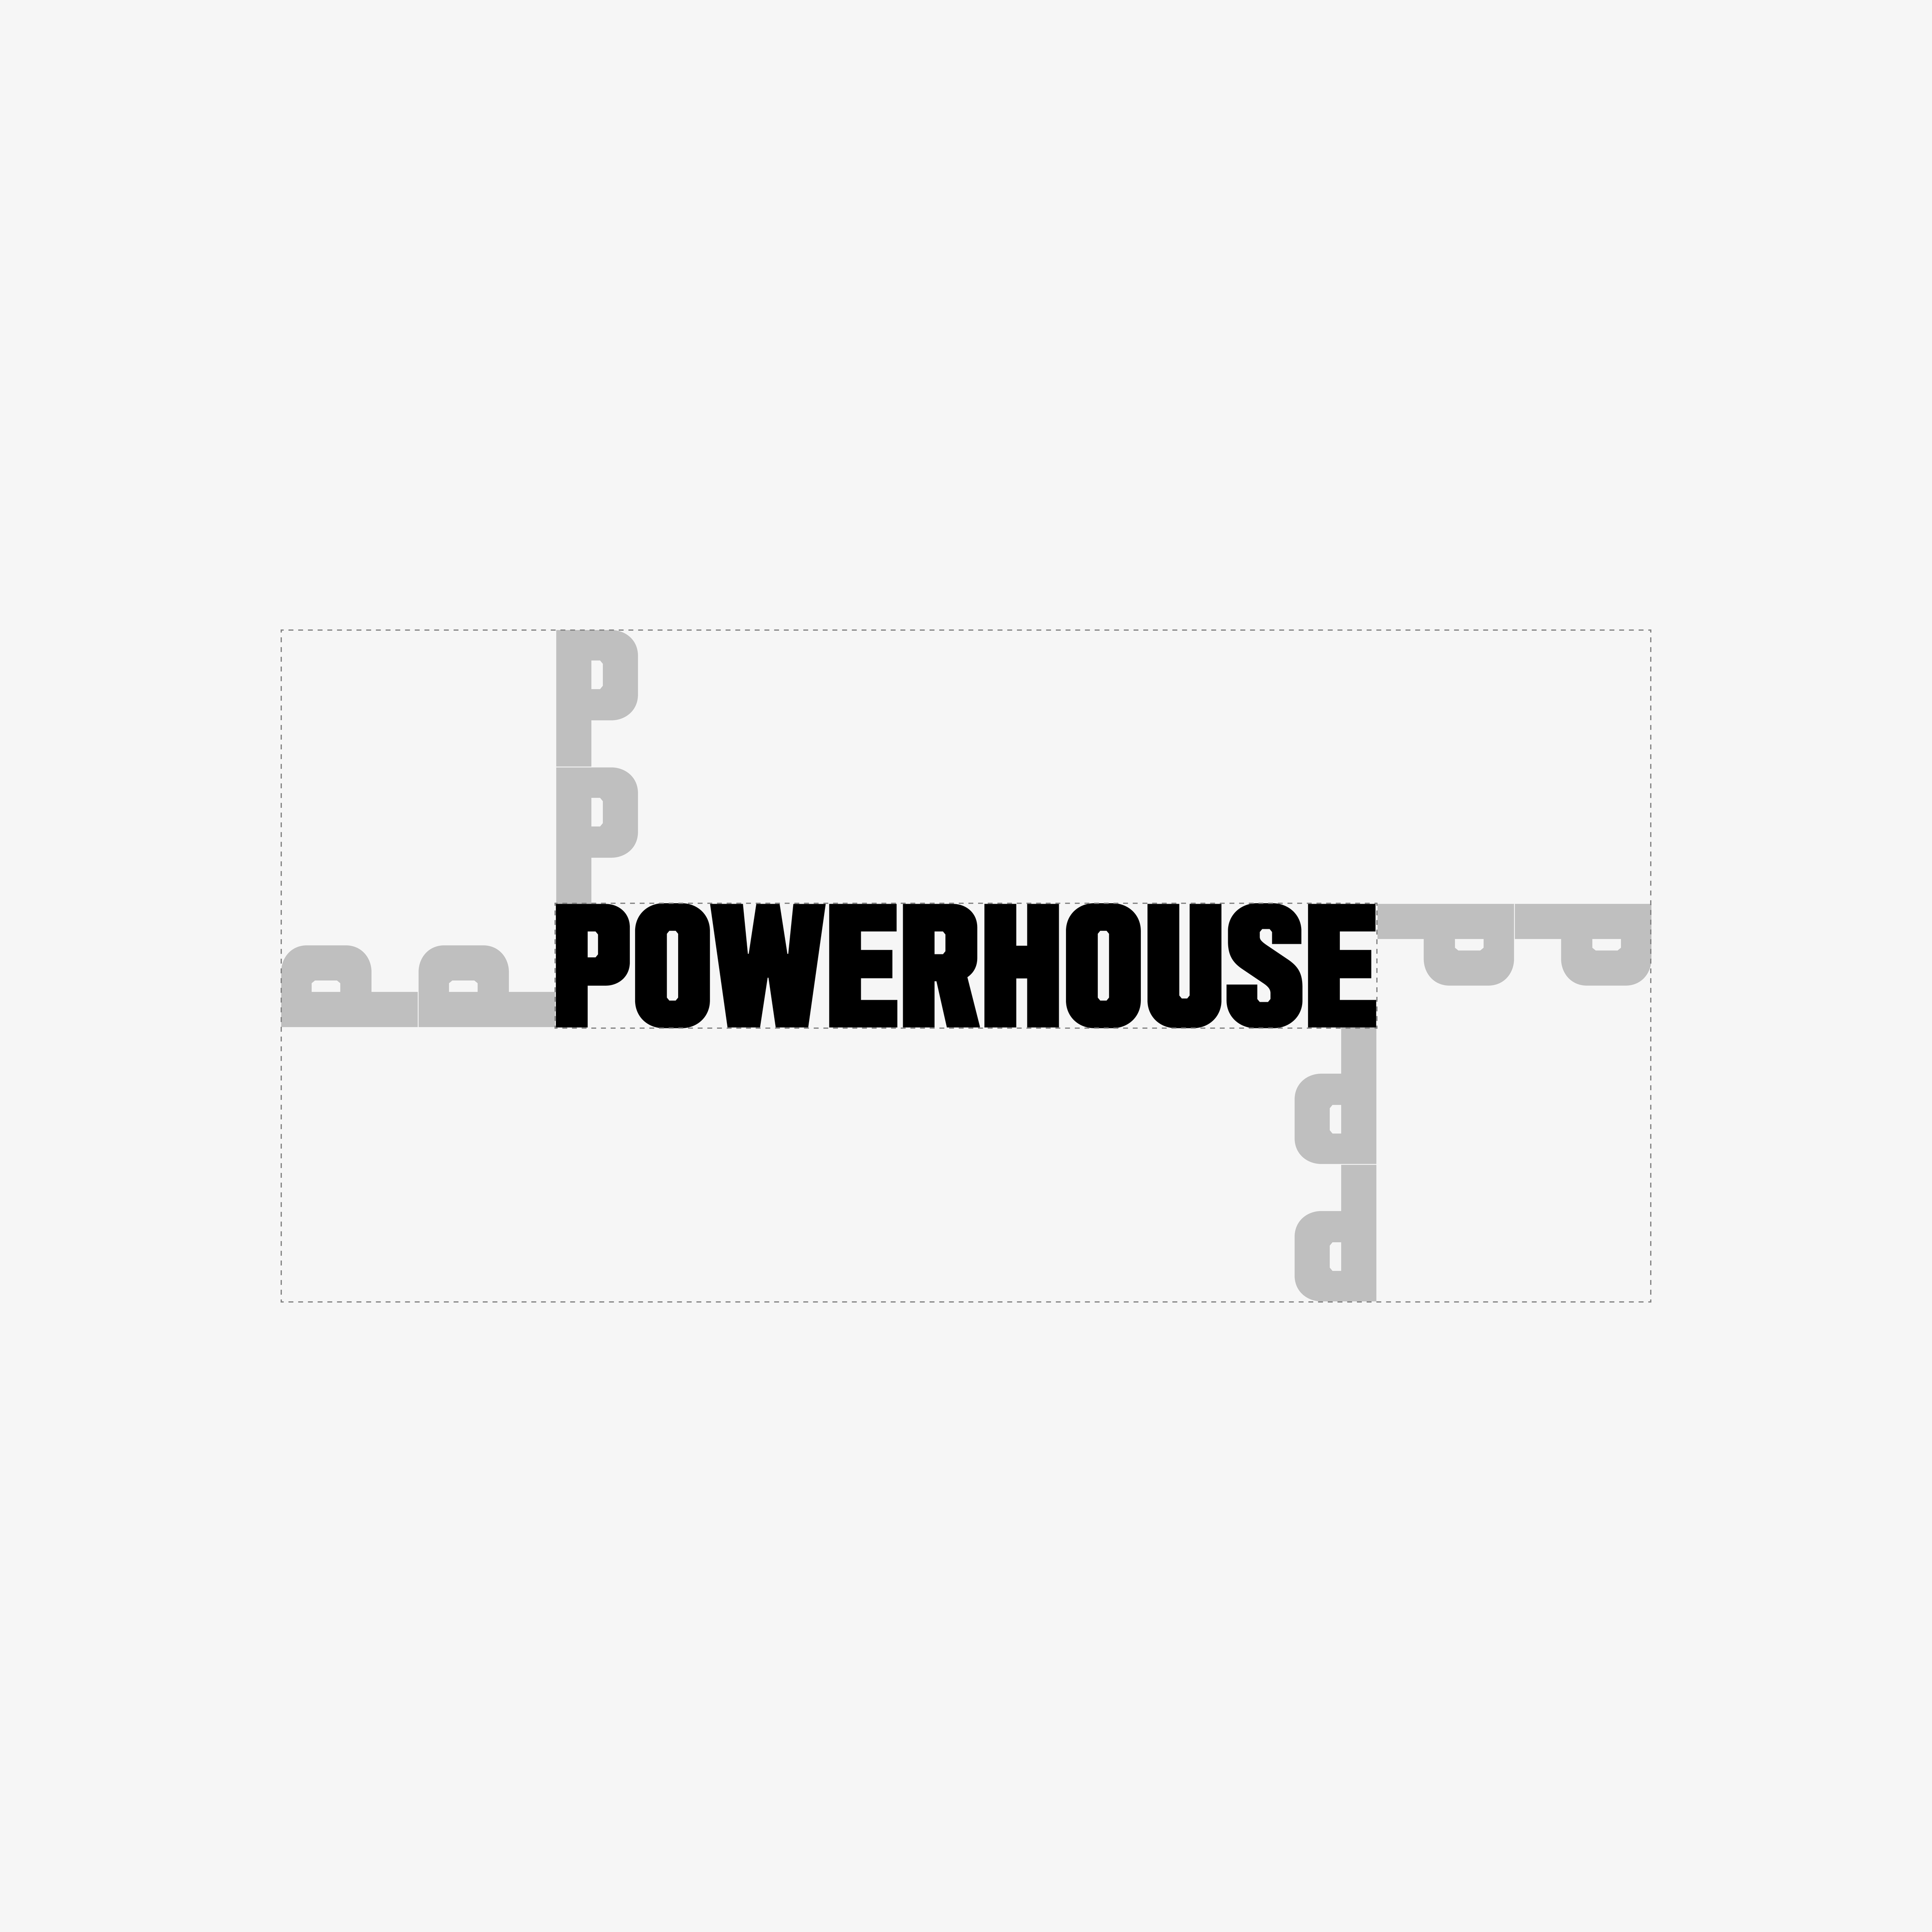 Examples of spacing around Powerhouse Identity